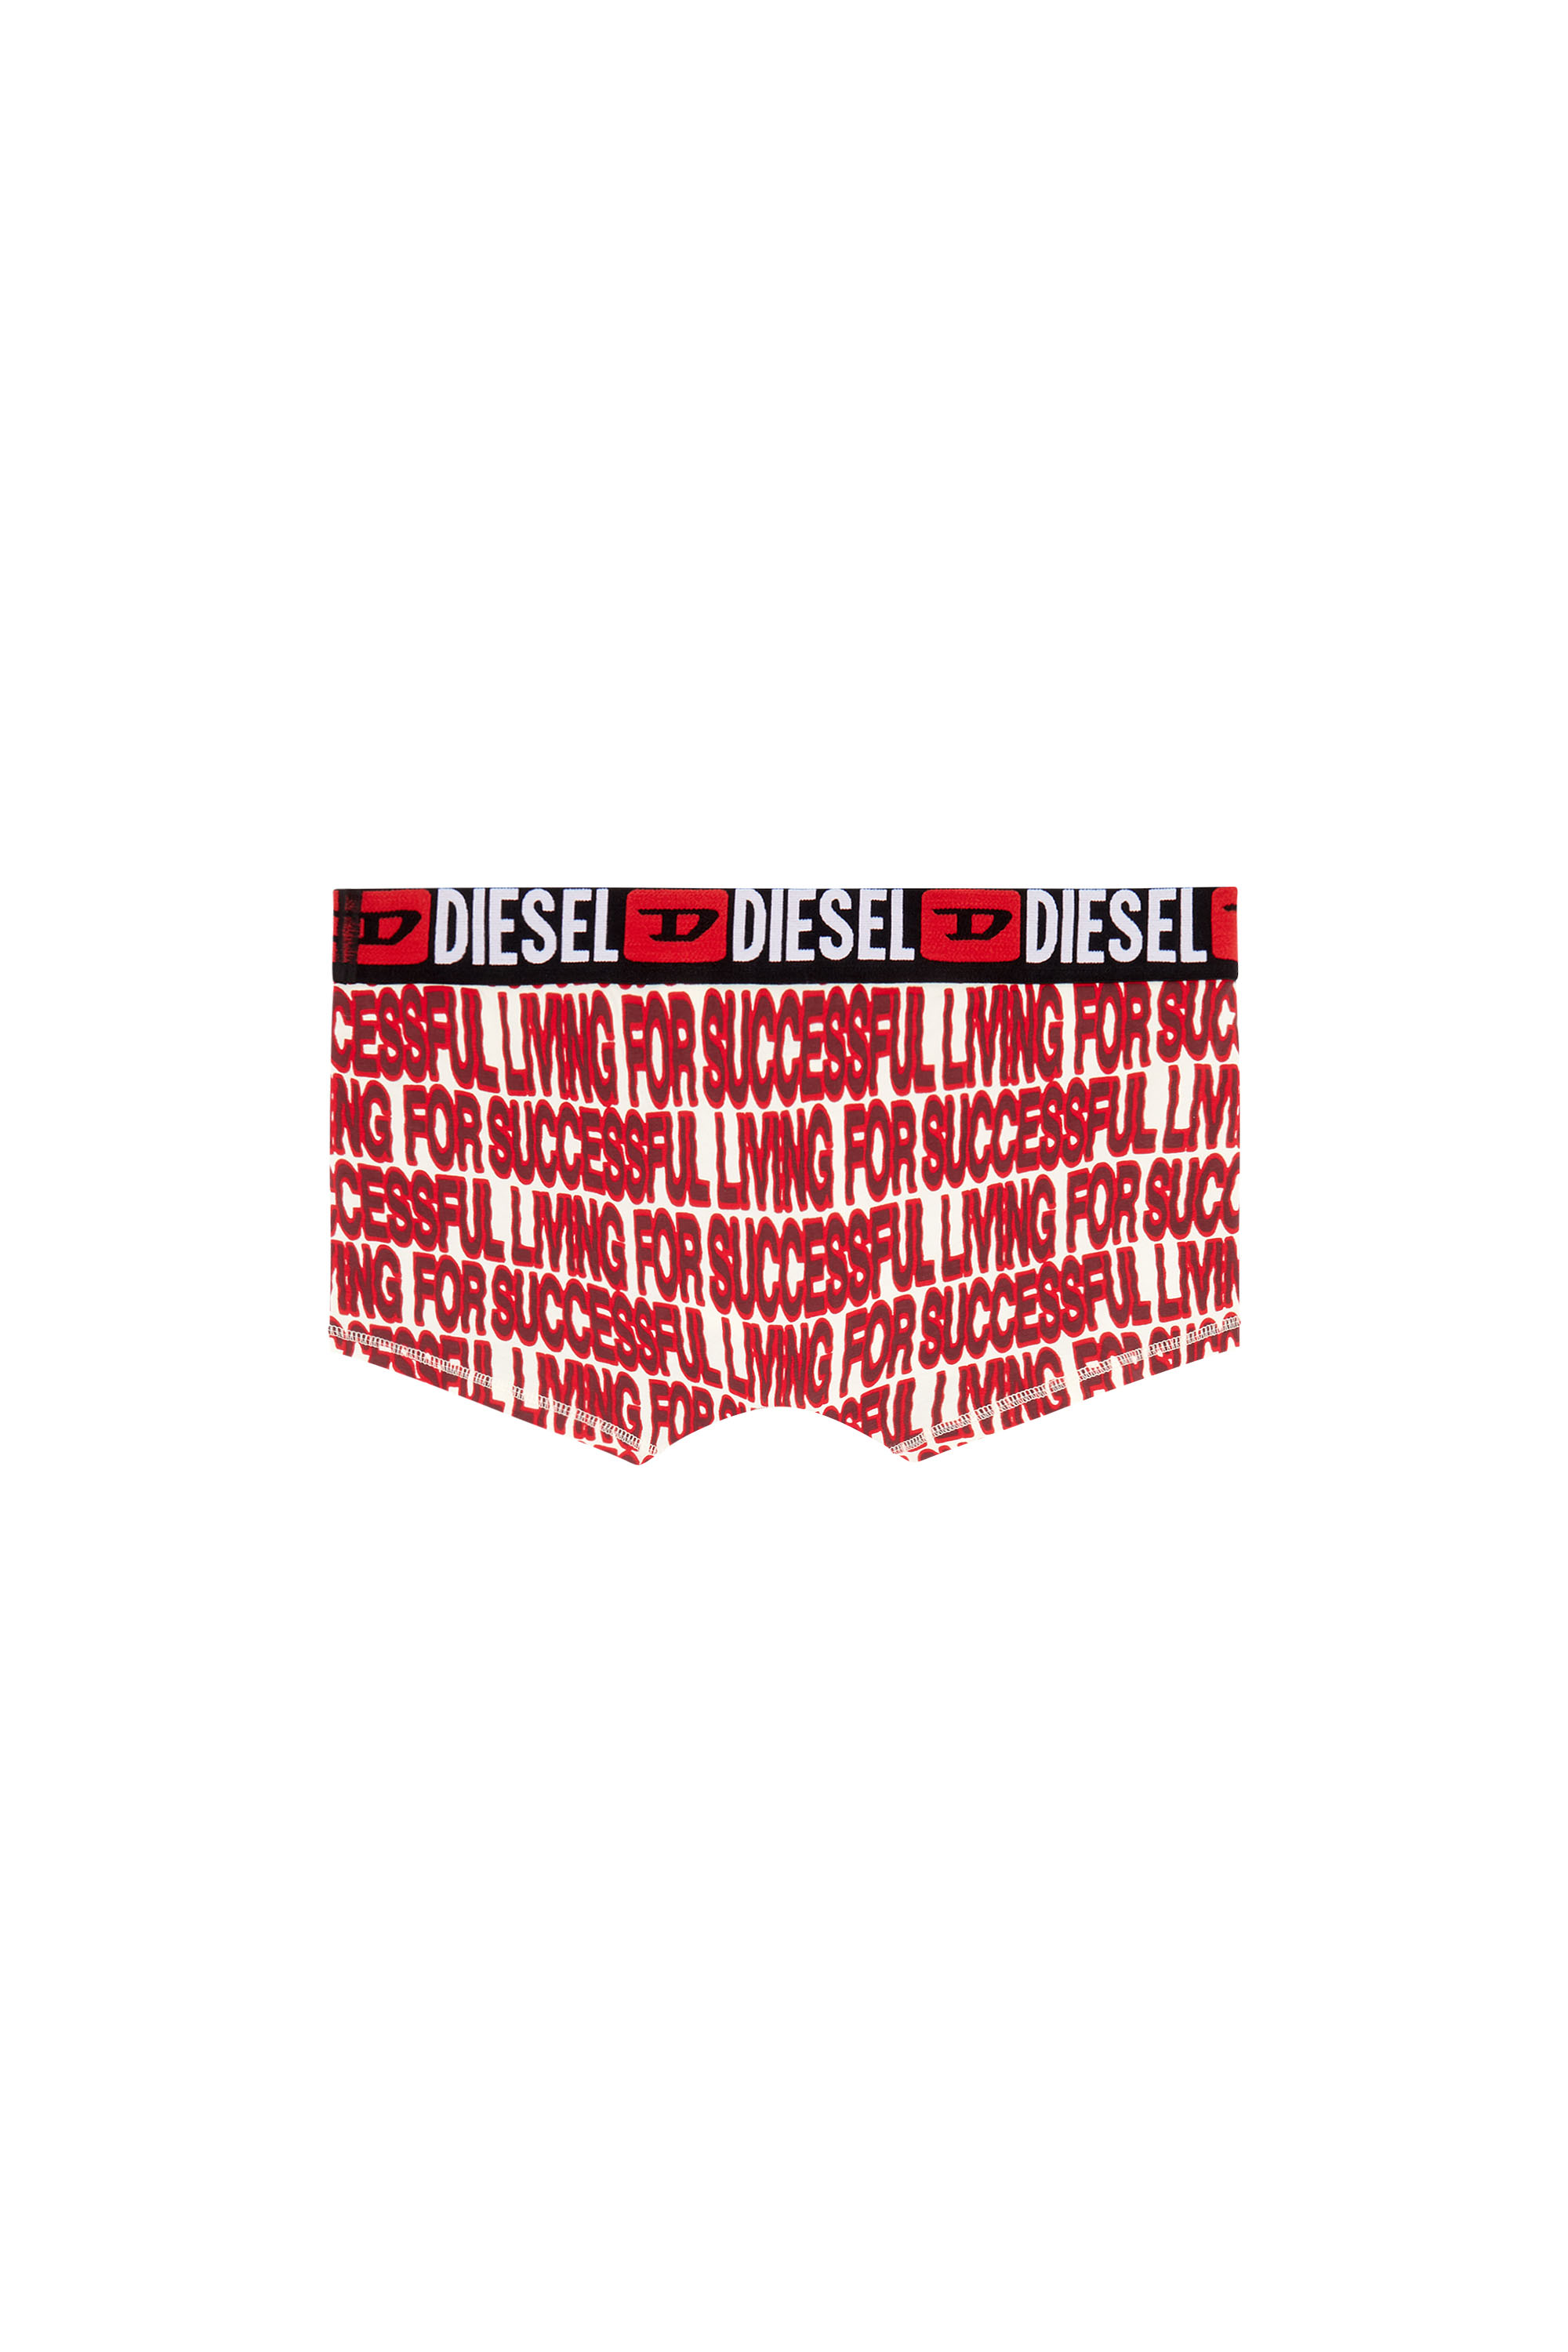 Diesel - UMBX-DAMIEN, Red/White - Image 2